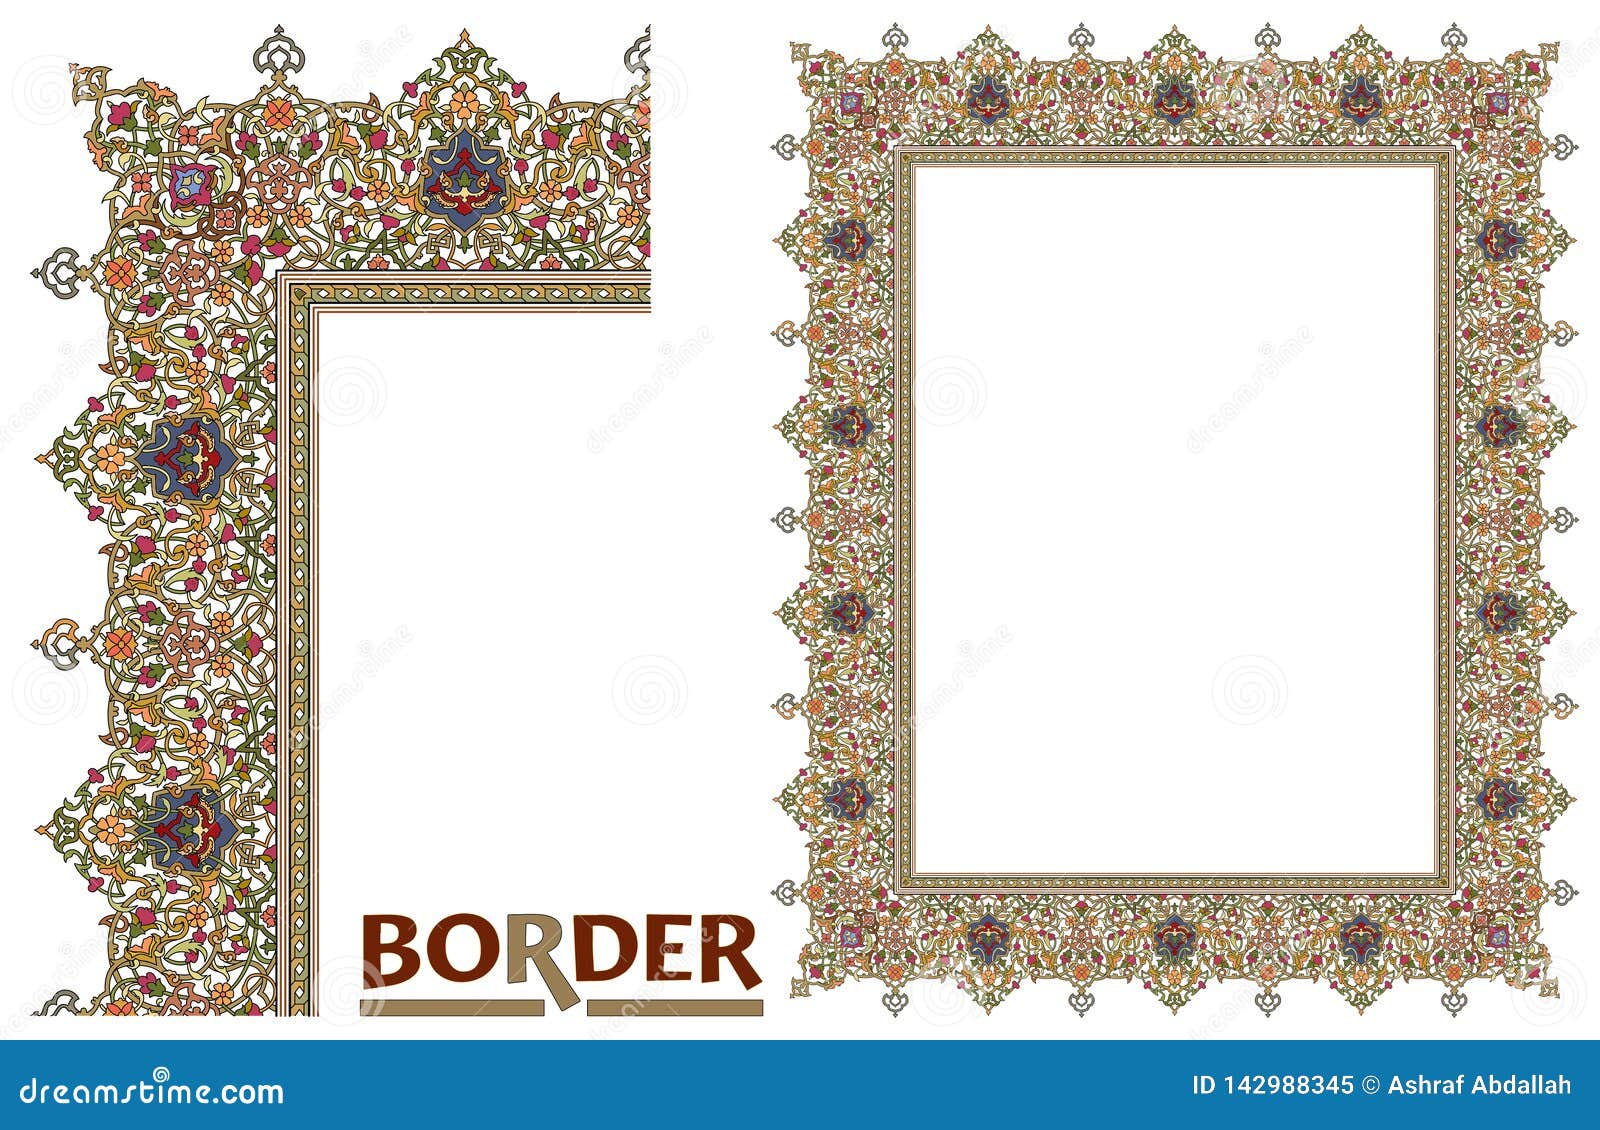 old world borders  - tiled frame in plant leaves and flowers framework decorative elegant style